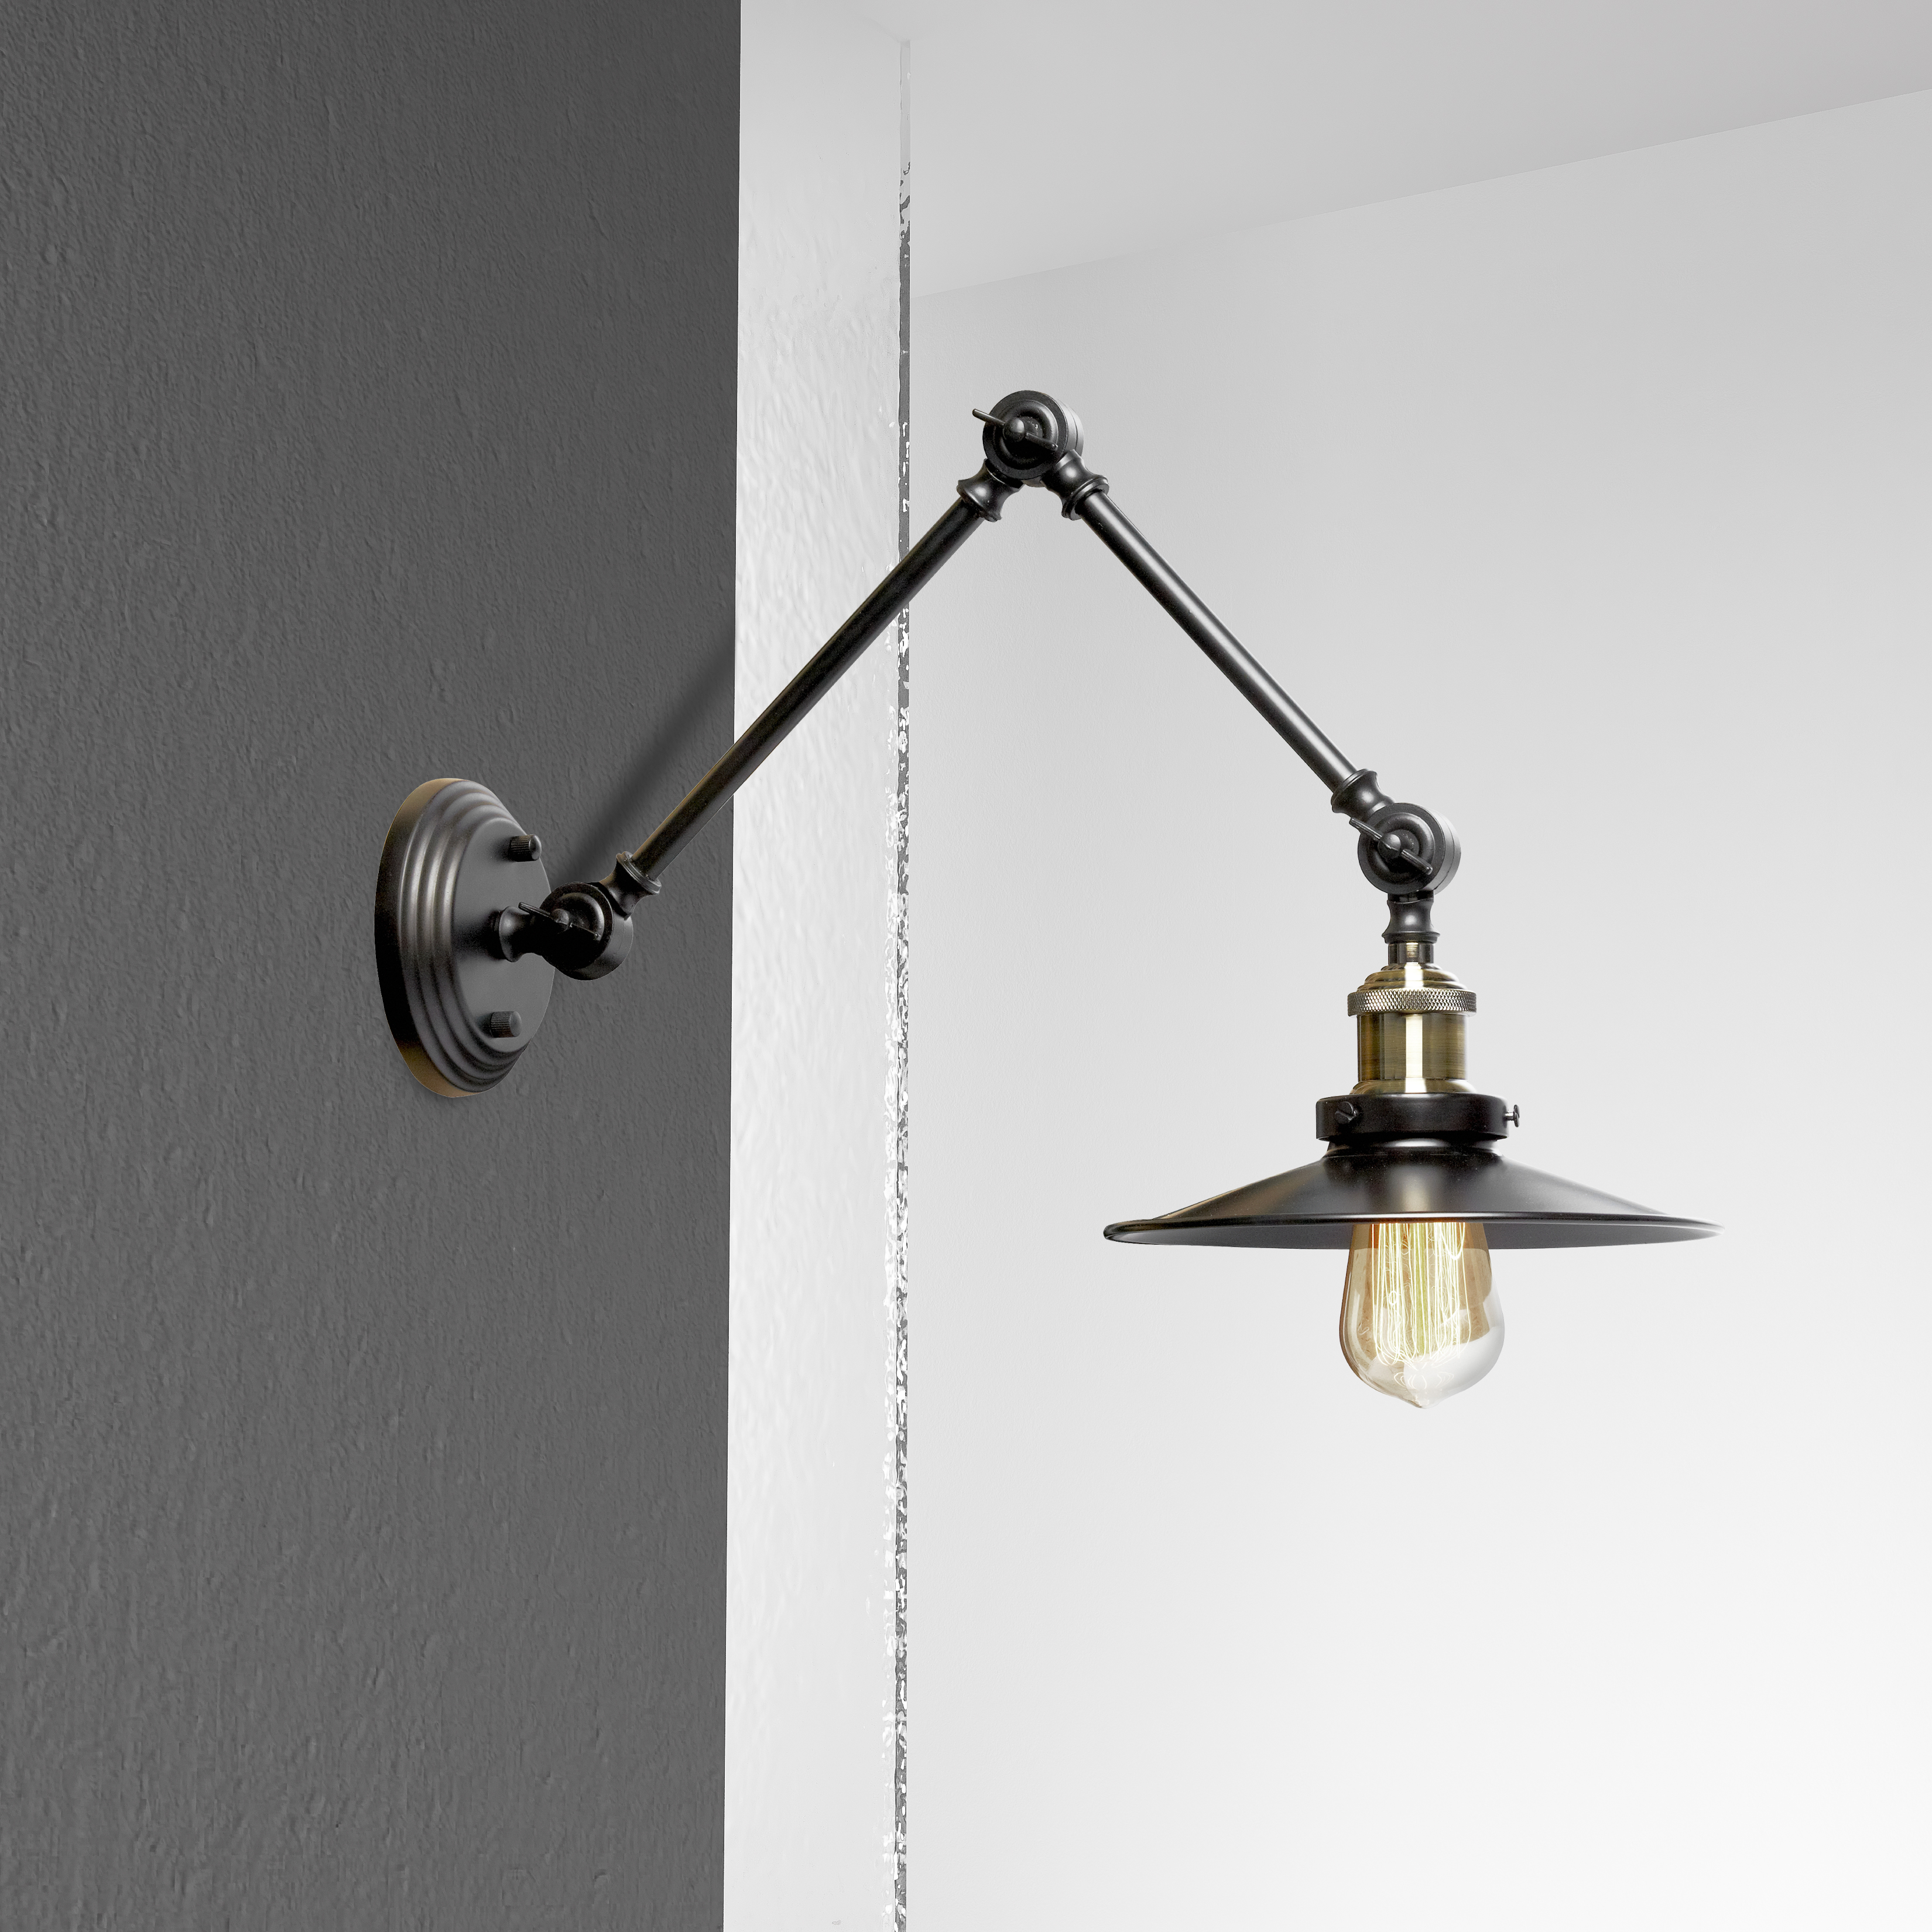 1LT Incandescent Adjustable Wall Lamp, Blk finish